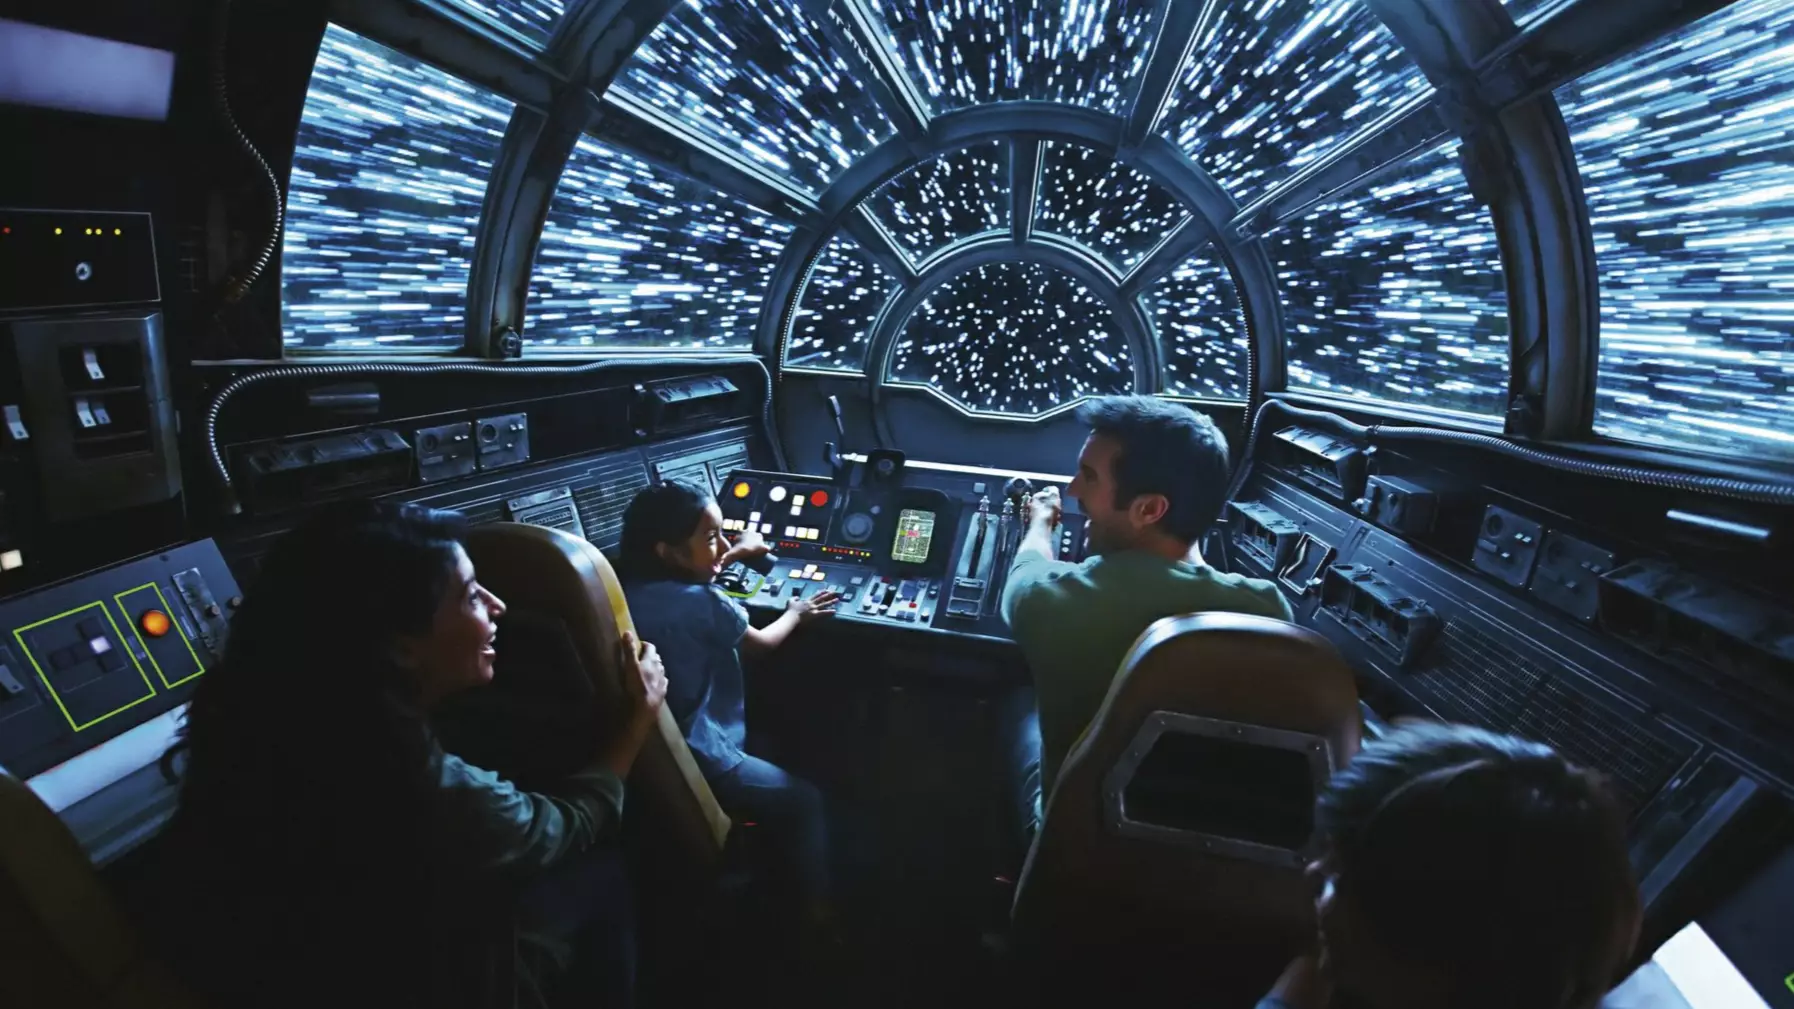 Take A Look Inside Disney's Epic Star Wars Theme Park